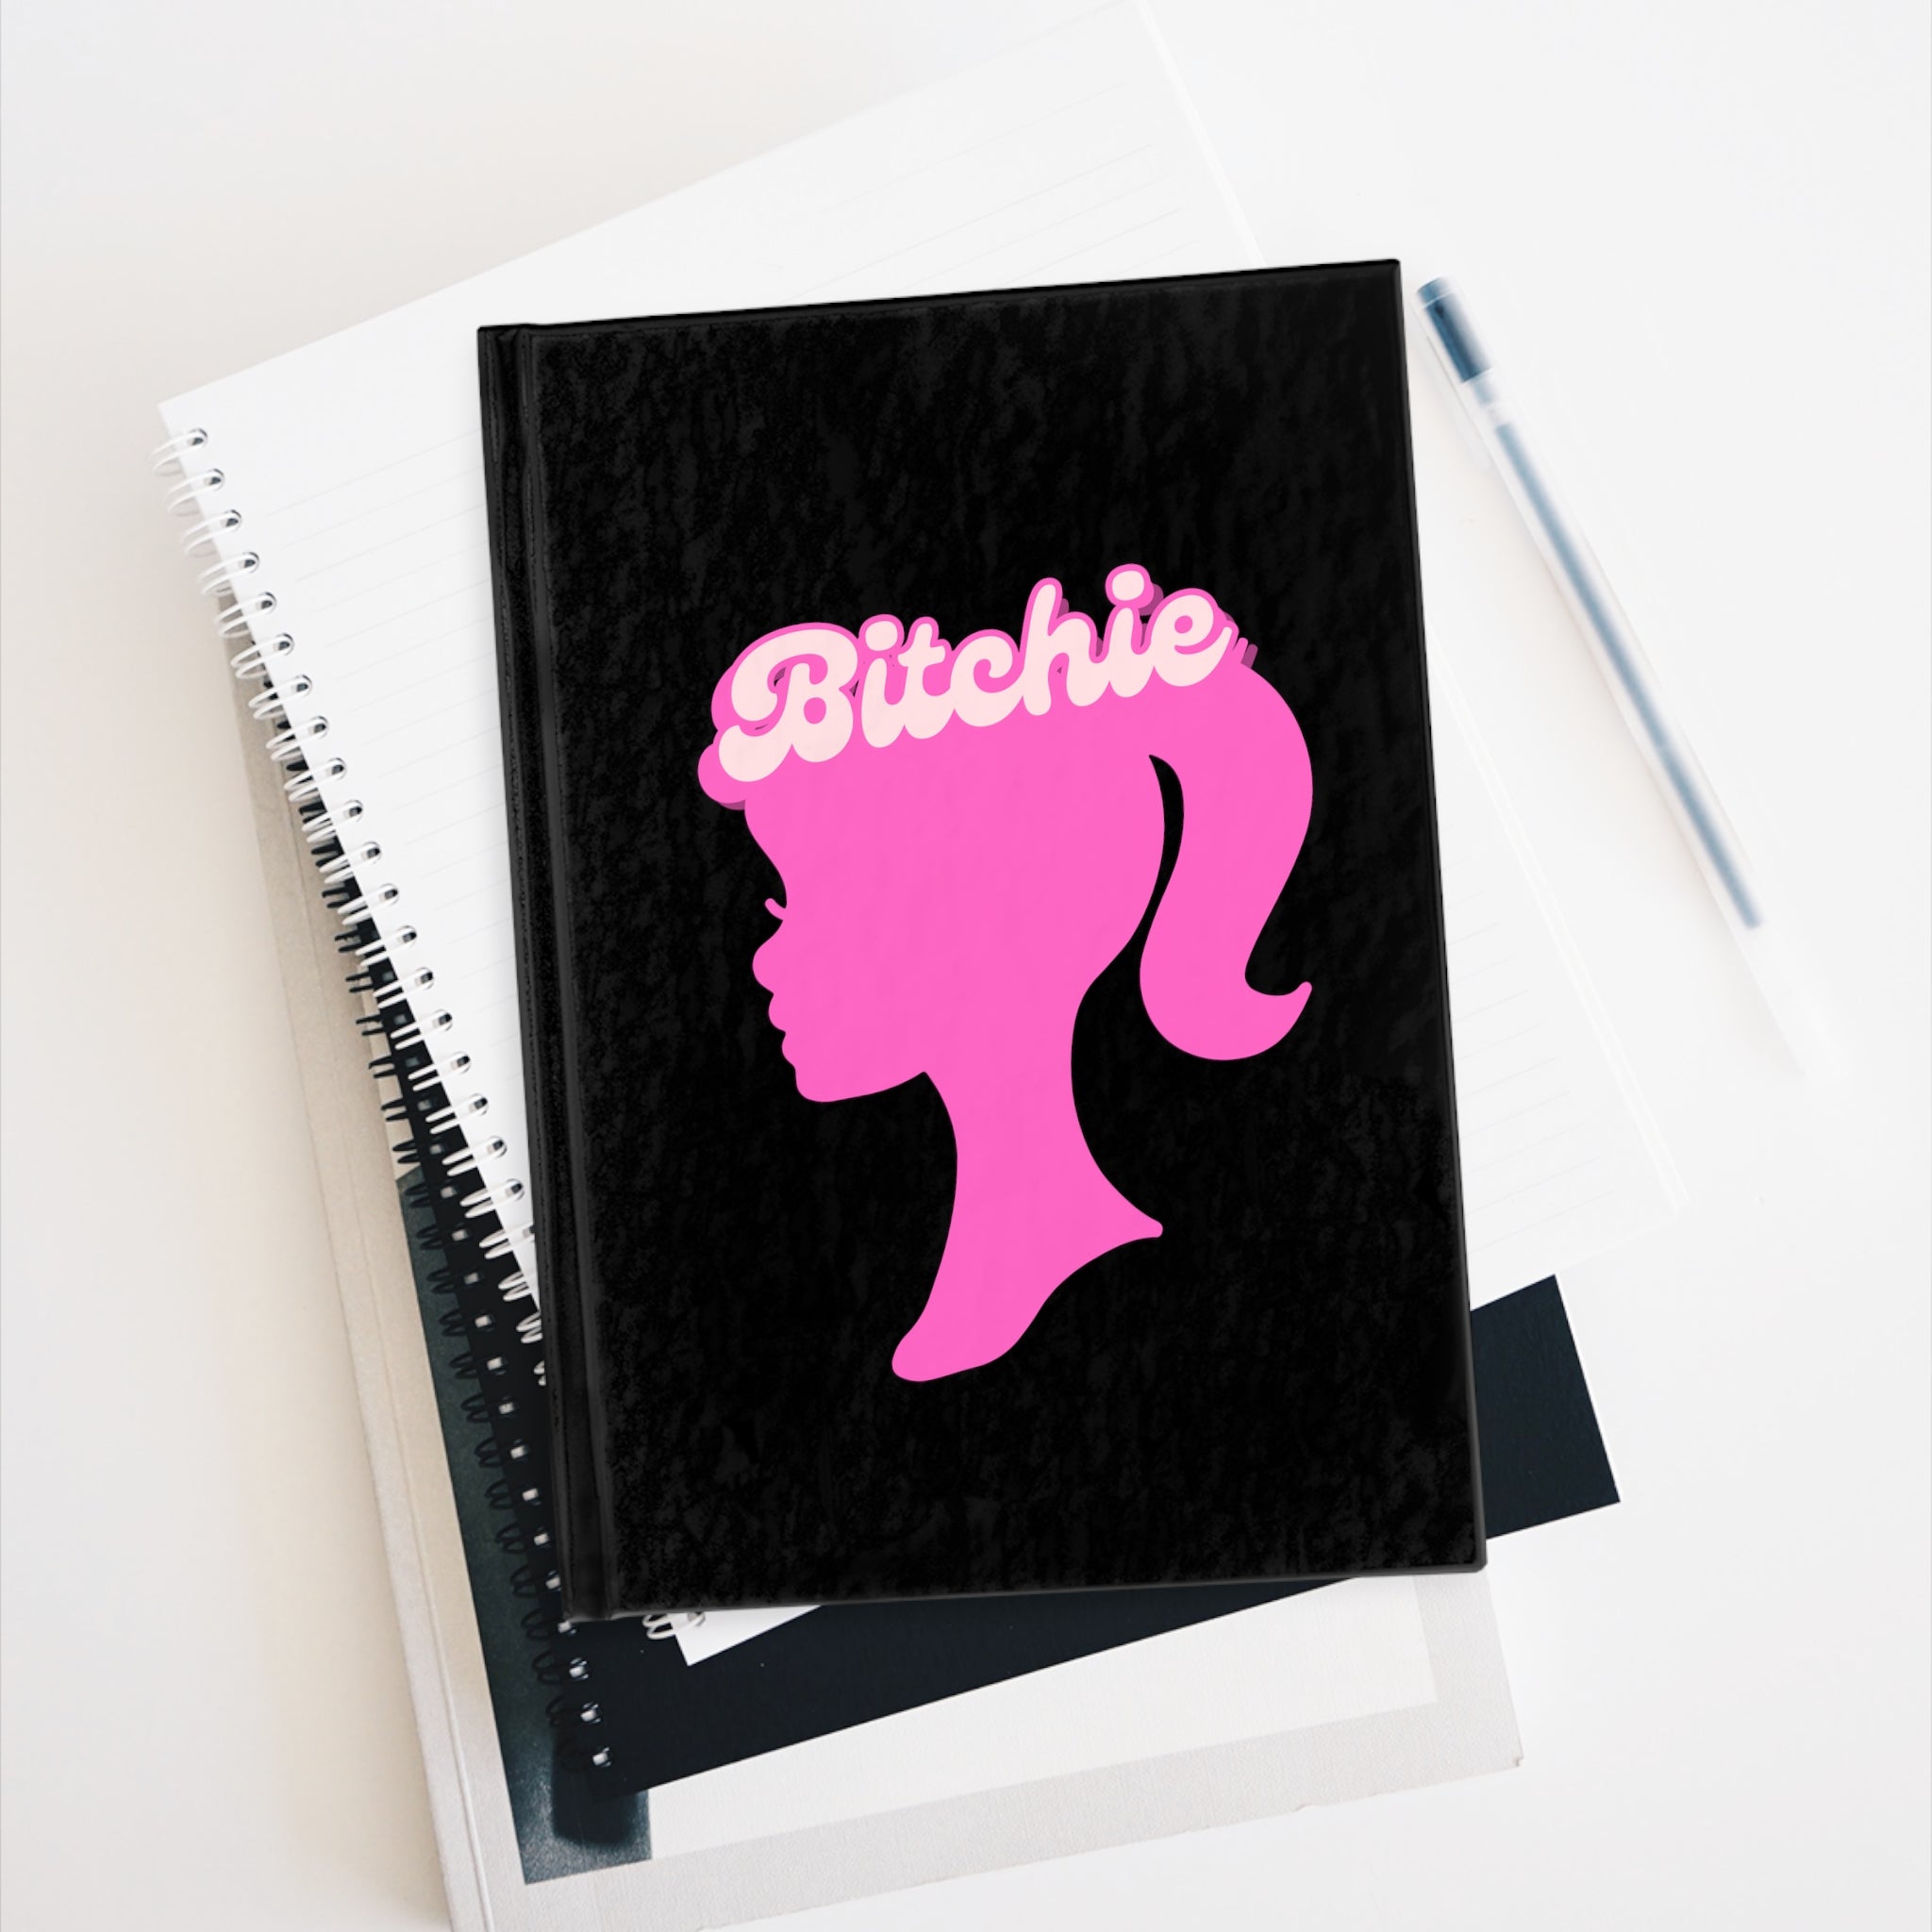 Barbie-Themed "Bitchie" Journal - Ruled Line (Black), Lined Notebook, Gratitude Journal